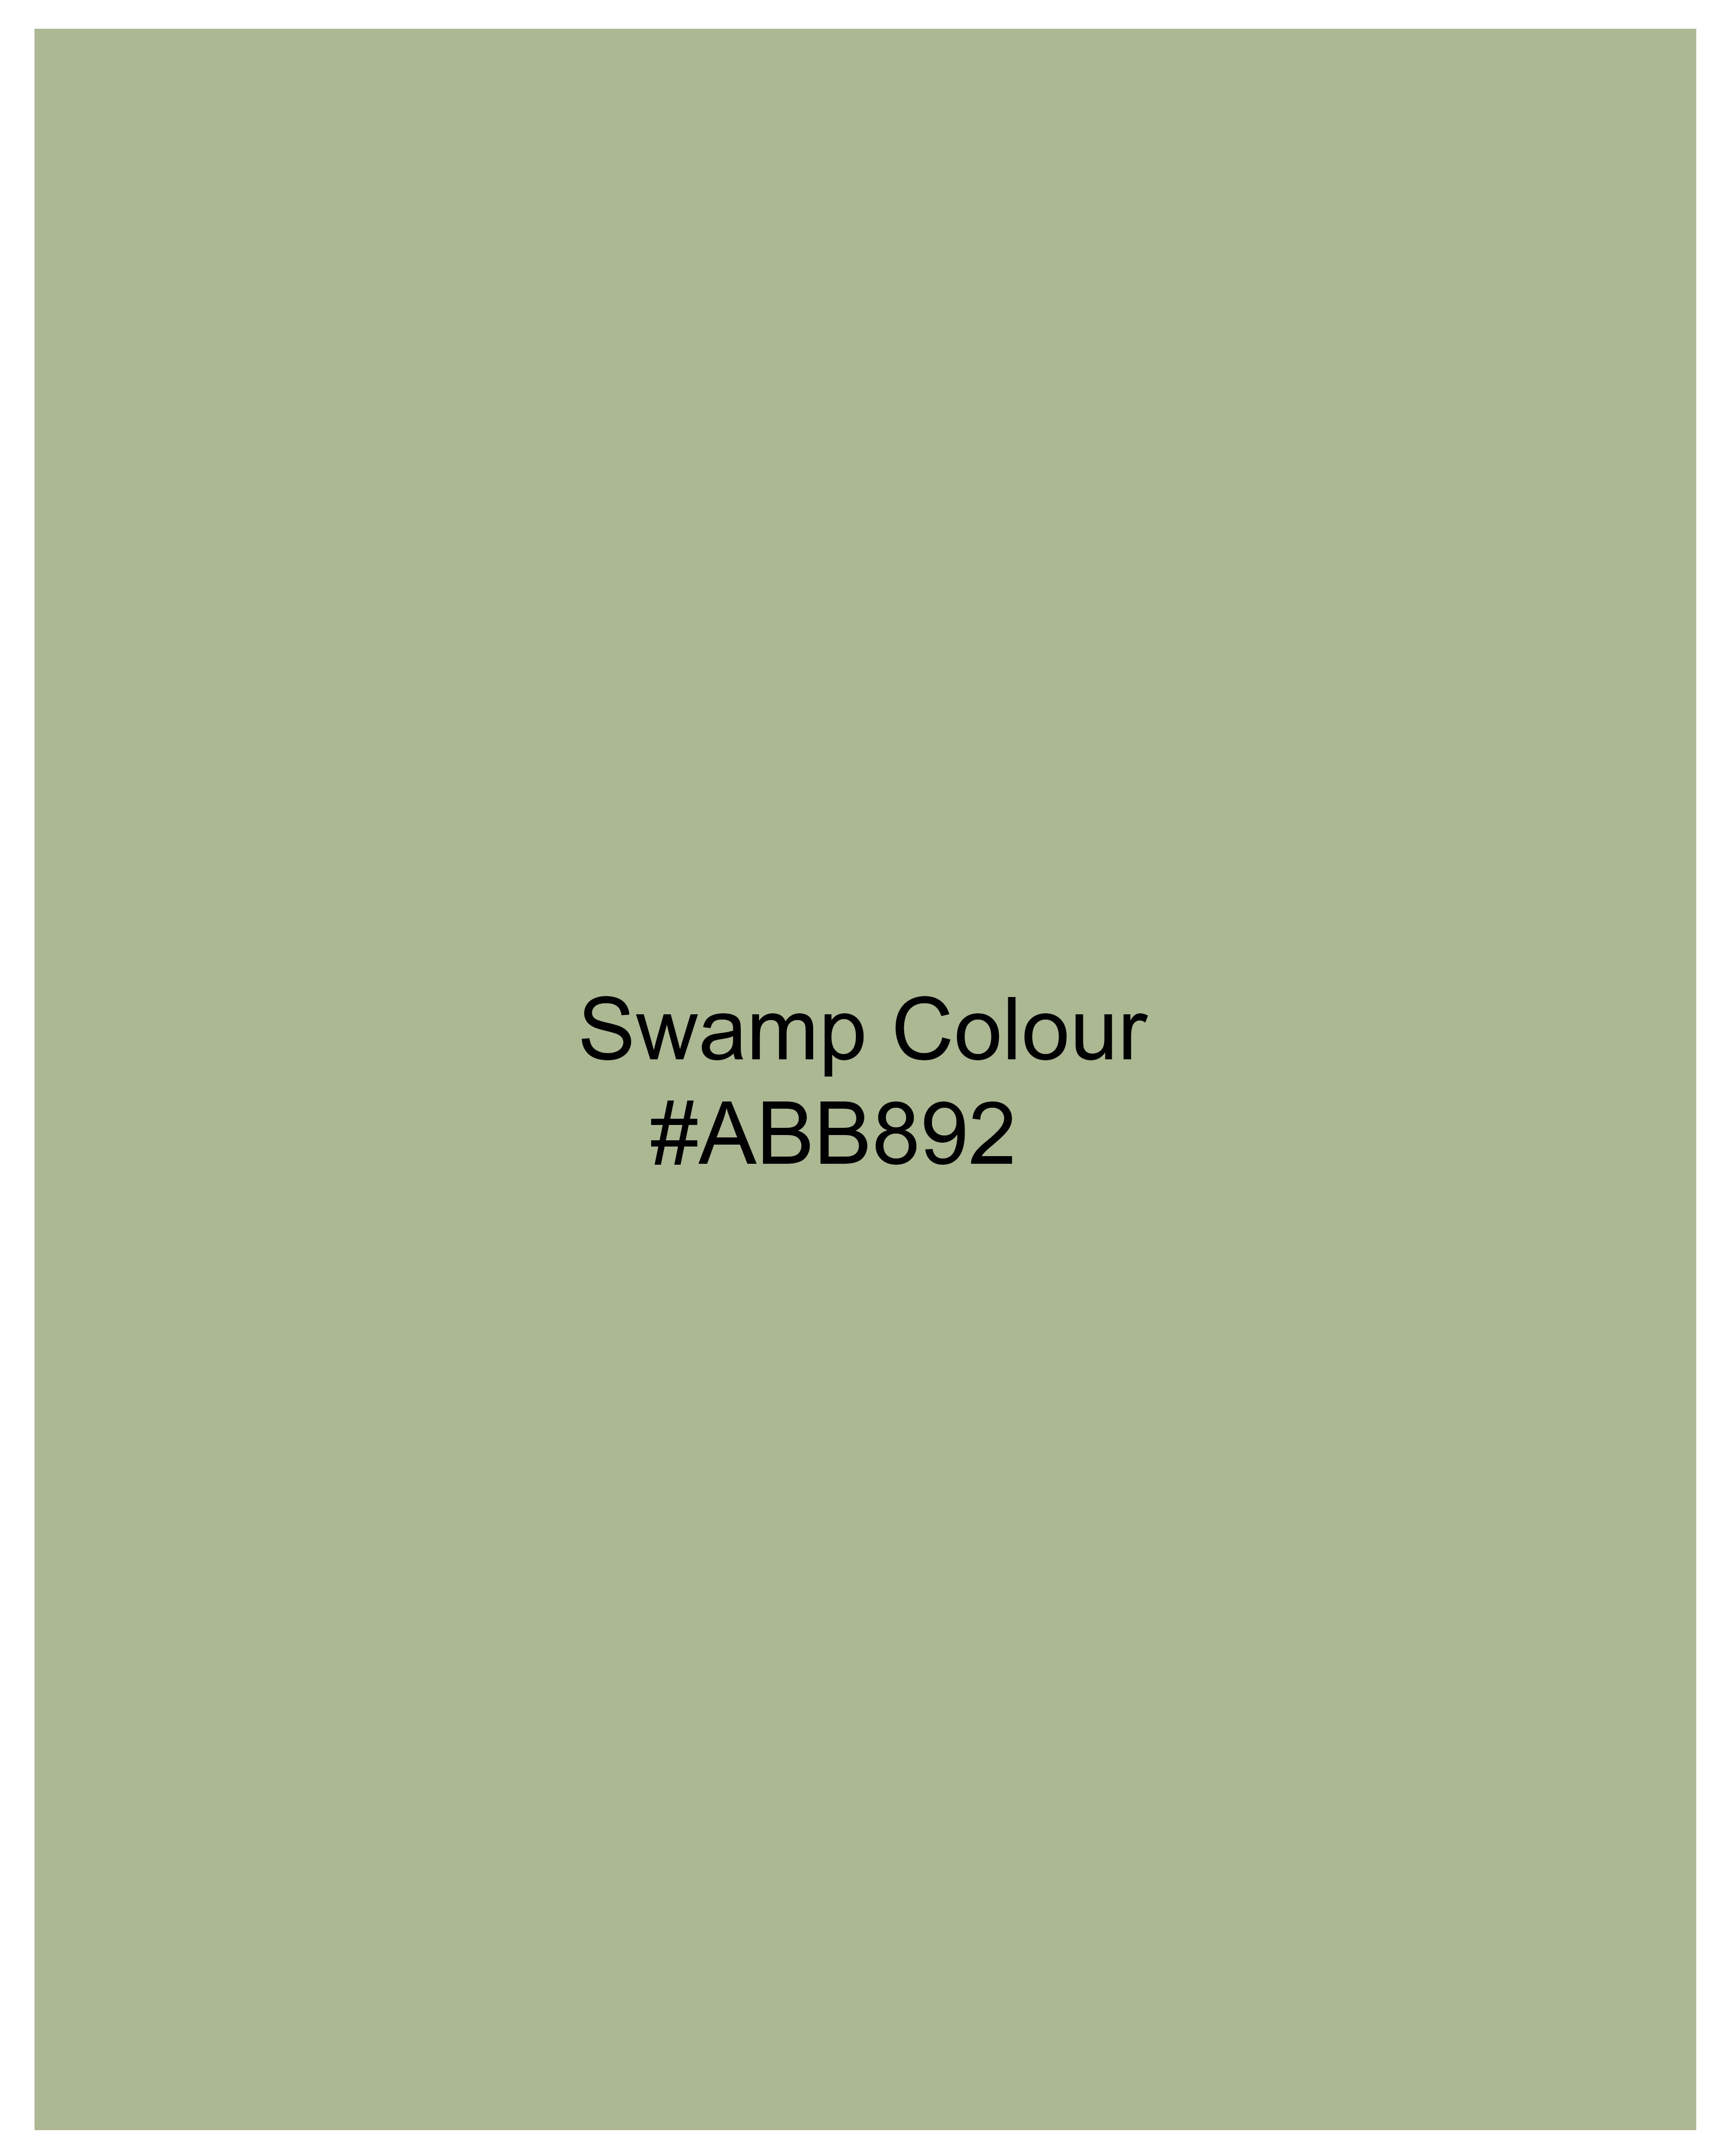 Swamp Green Snake Pleated Super Soft Premium Cotton Tuxedo Shirt 8886-BLK-TXD-38, 8886-BLK-TXD-H-38,  8886-BLK-TXD-39,  8886-BLK-TXD-H-39,  8886-BLK-TXD-40,  8886-BLK-TXD-H-40,  8886-BLK-TXD-42,  8886-BLK-TXD-H-42,  8886-BLK-TXD-44,  8886-BLK-TXD-H-44,  8886-BLK-TXD-46,  8886-BLK-TXD-H-46,  8886-BLK-TXD-48,  8886-BLK-TXD-H-48,  8886-BLK-TXD-50,  8886-BLK-TXD-H-50,  8886-BLK-TXD-52,  8886-BLK-TXD-H-52